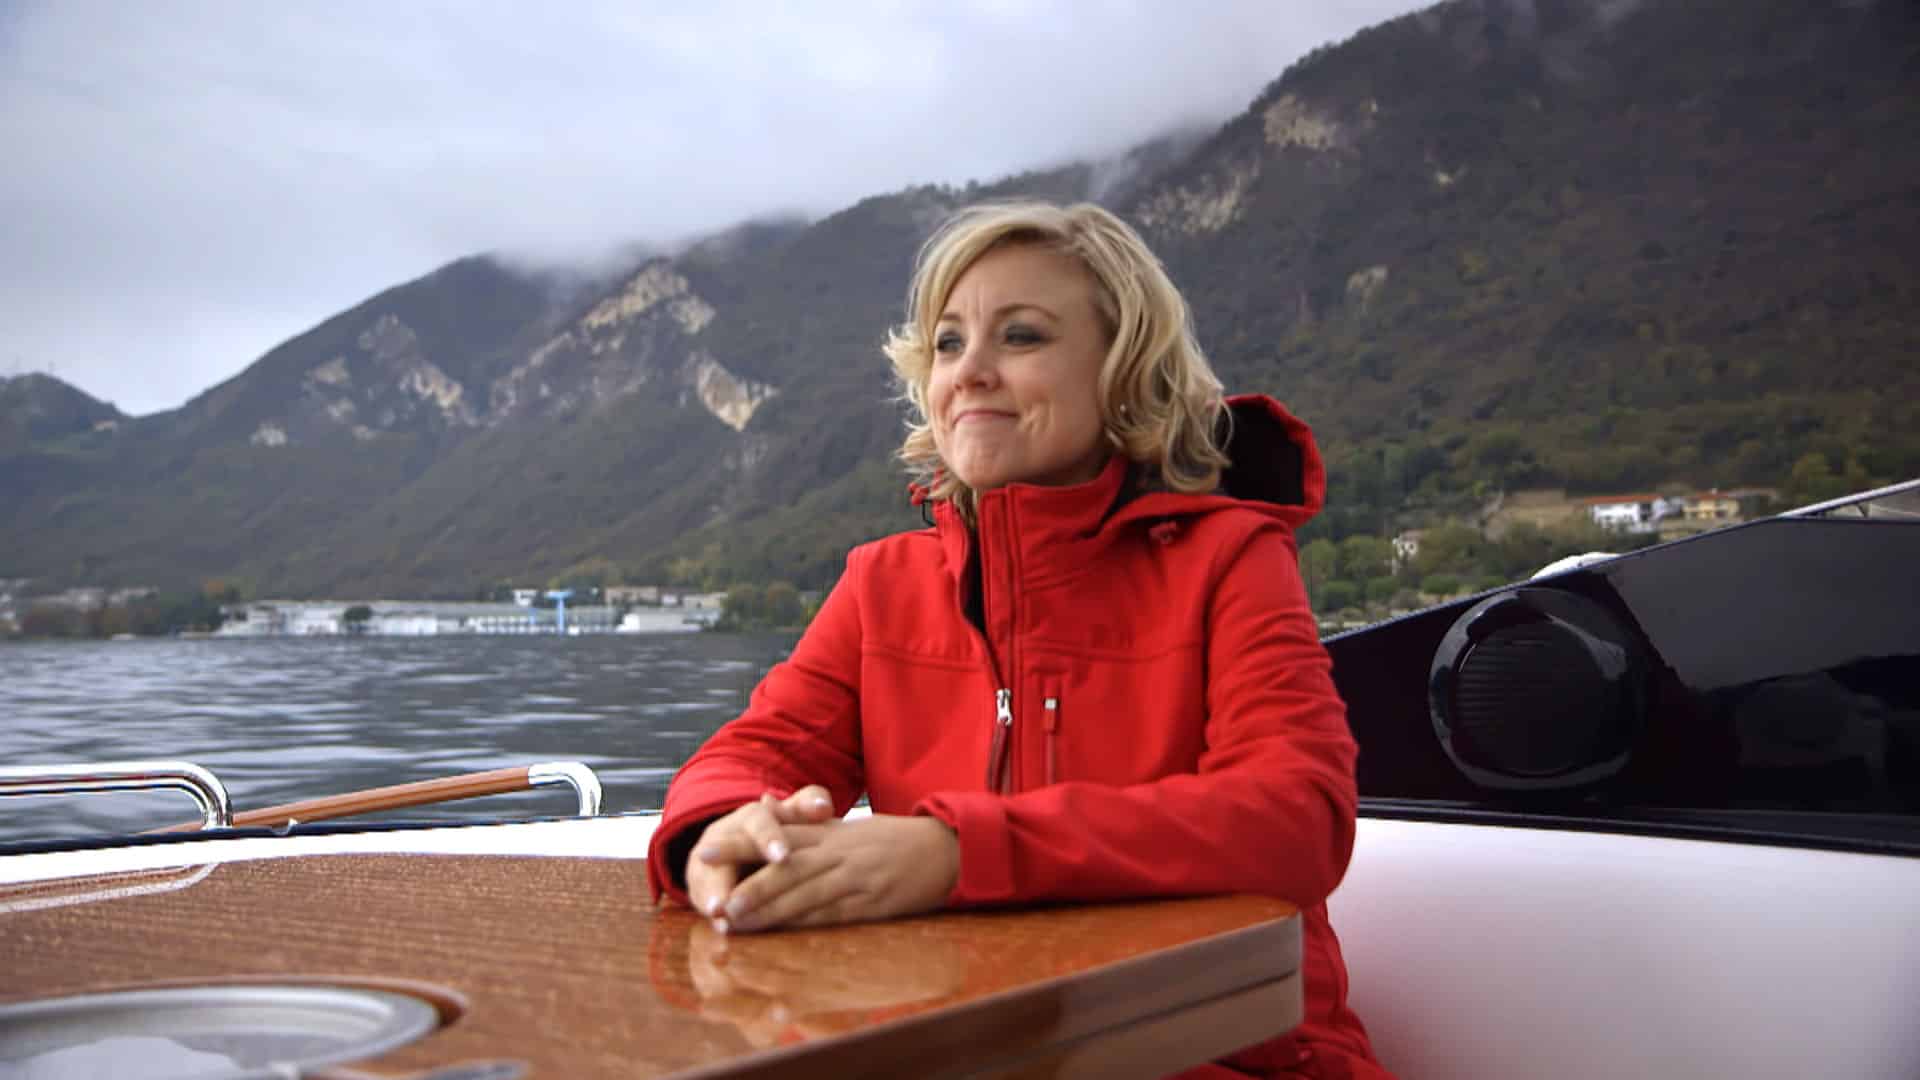 Kathy McCabe: Italian Travel Expert and PBS Travel Host - Dream of Italy1920 x 1080